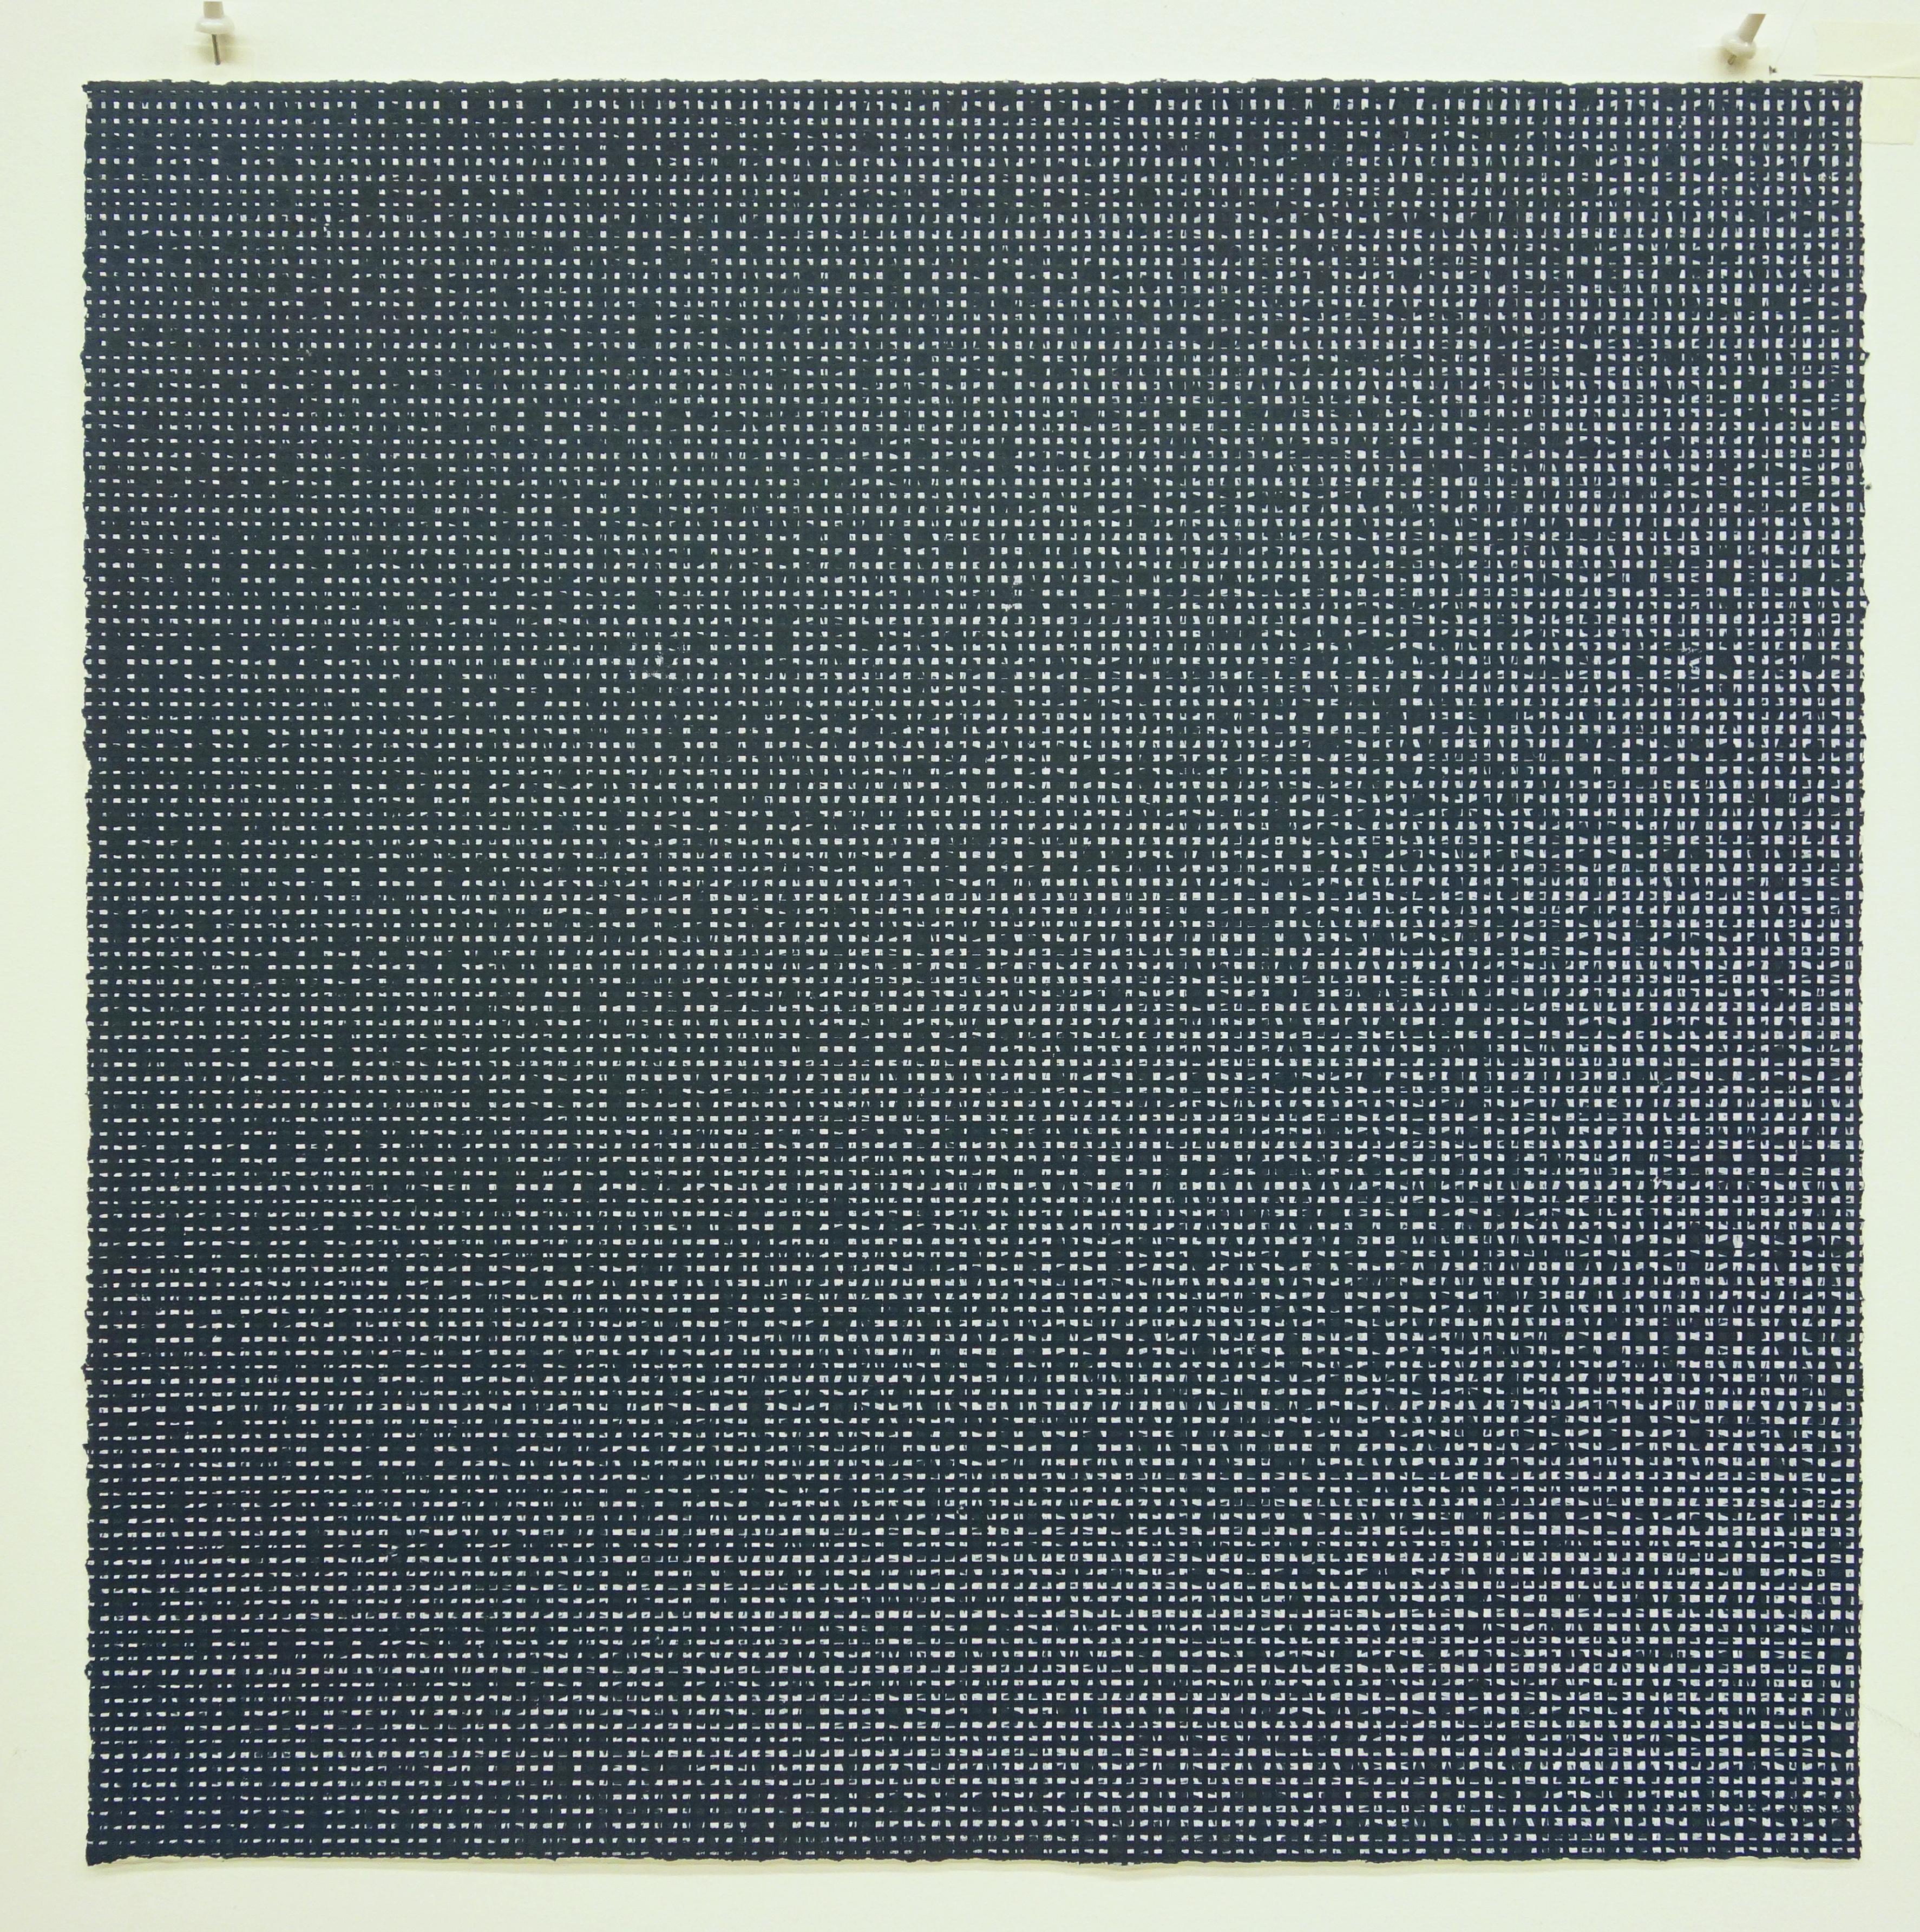 Rob de Oude, Untitled-Wassaic 8, 2016, silkscreen, 18 x 18 inches, Suite of 10 4